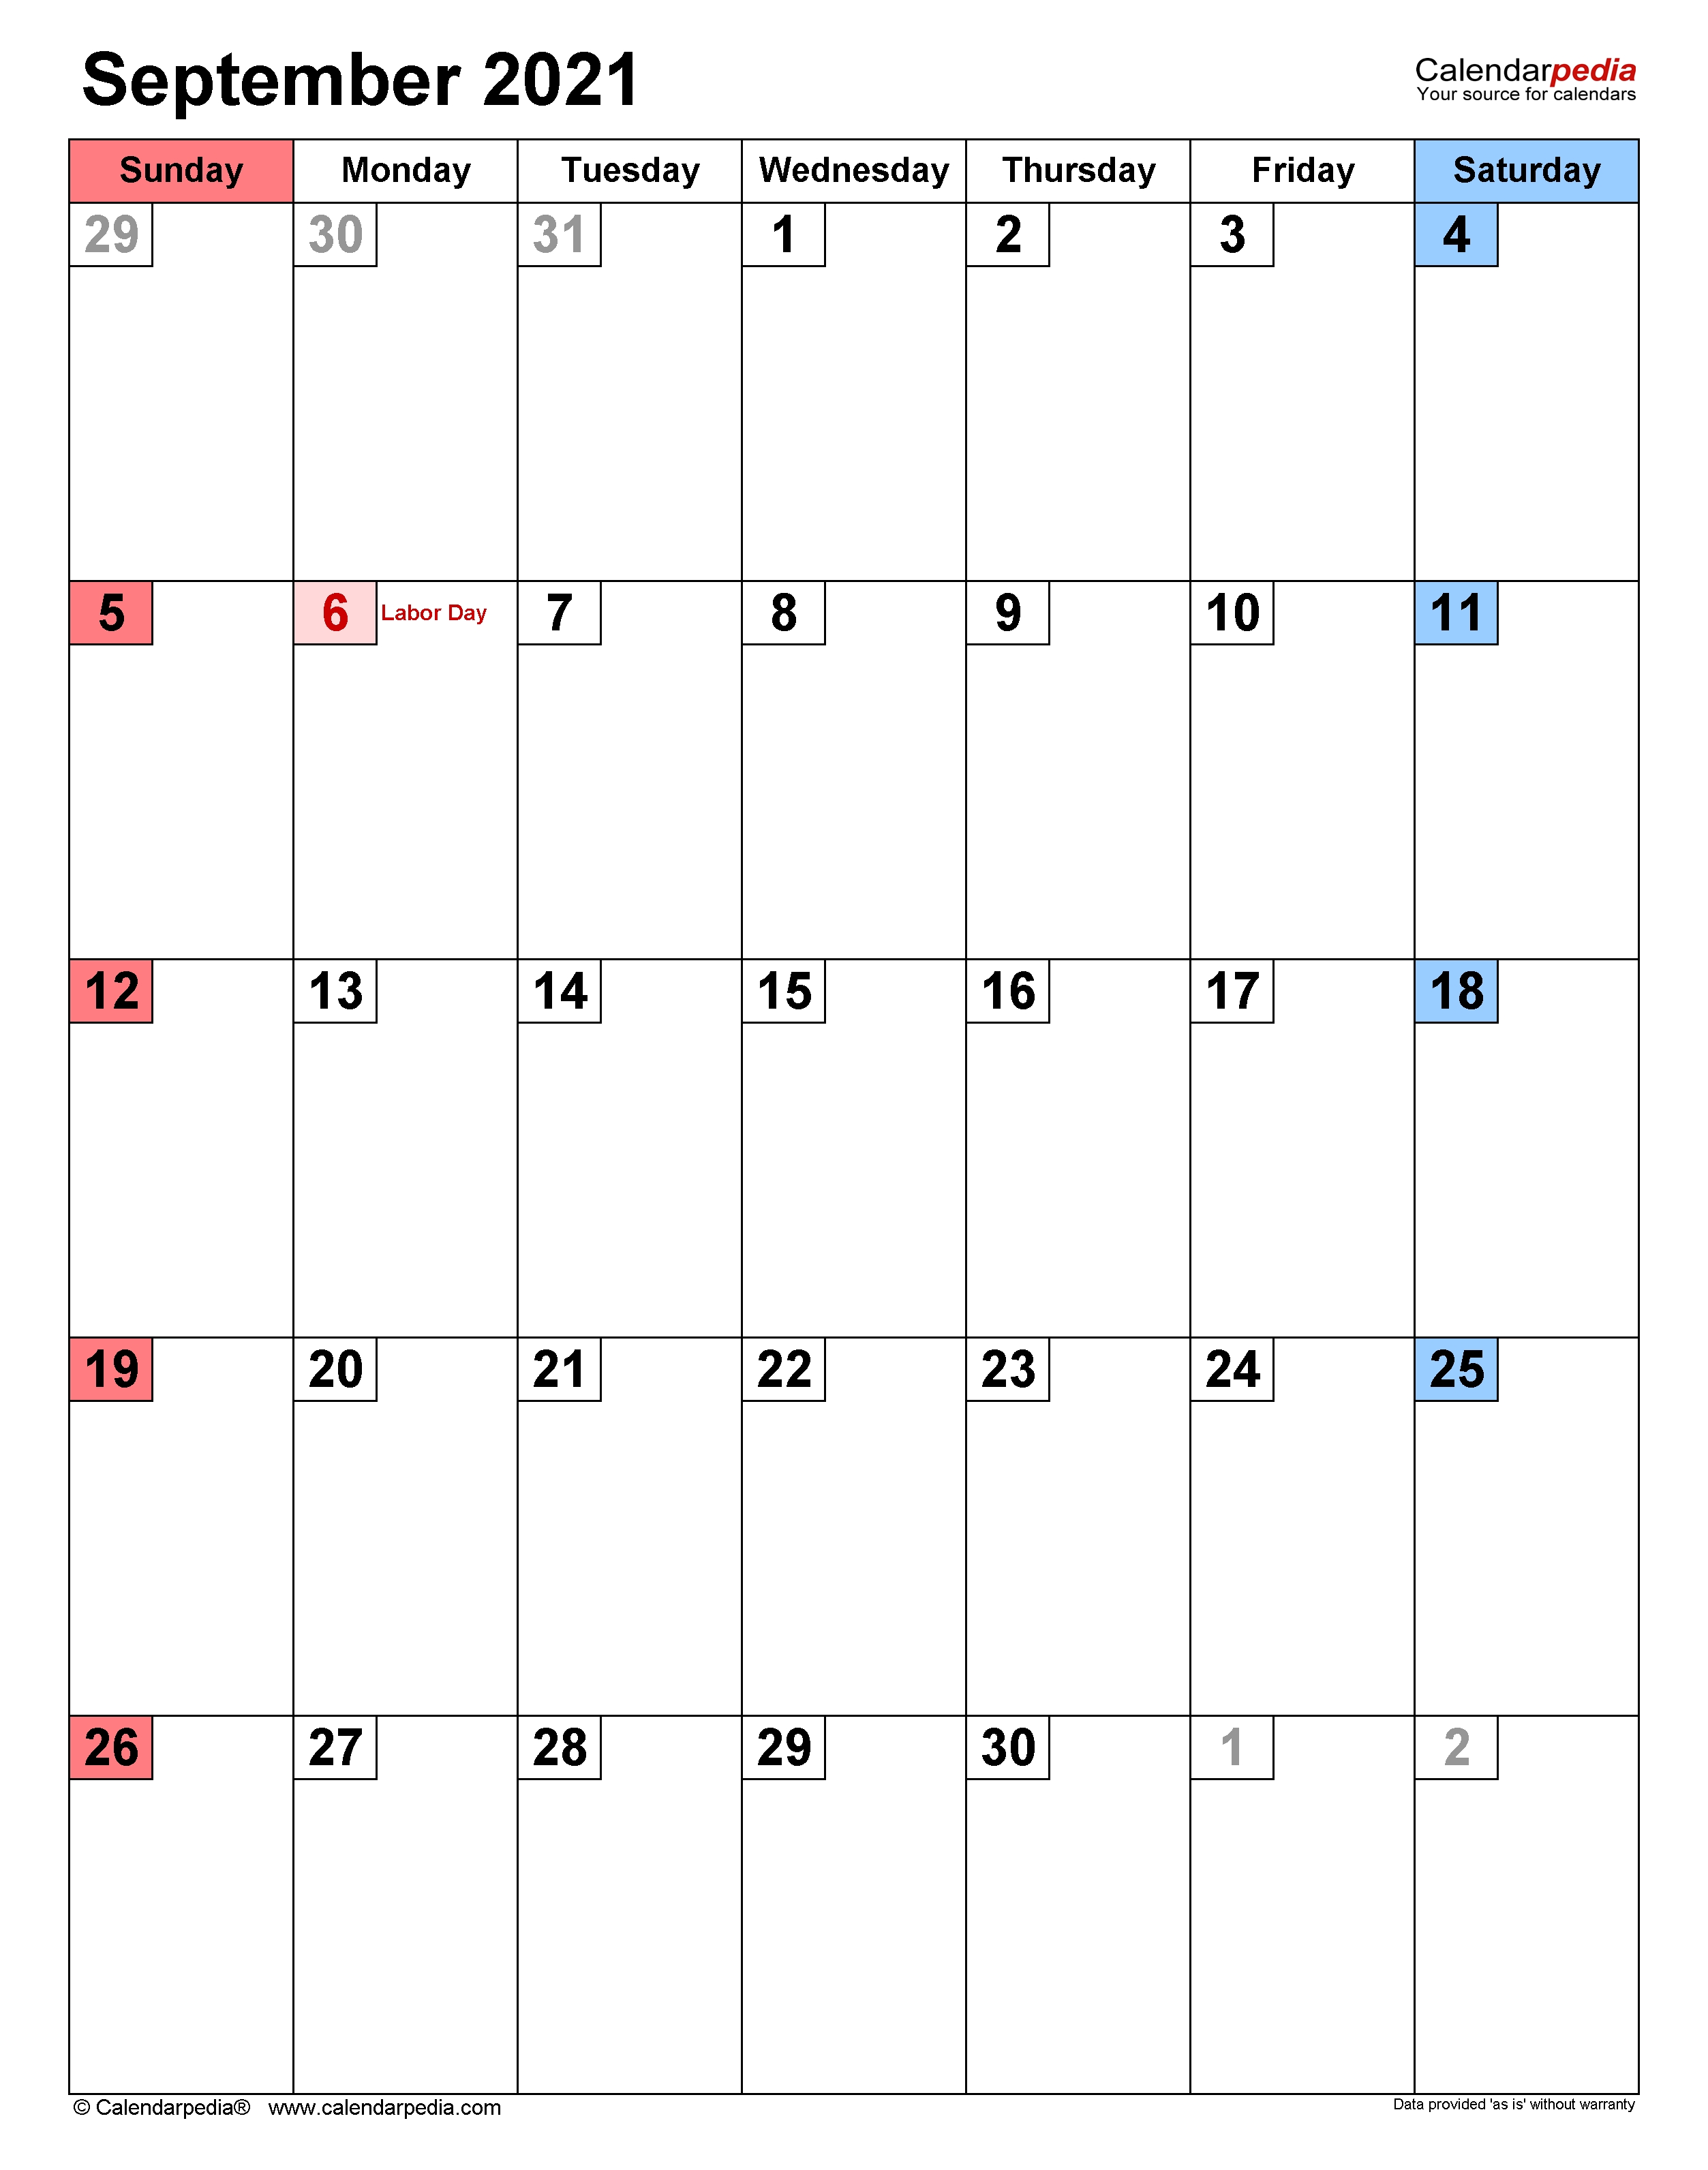 September 2021 Calendar | Templates For Word, Excel And Pdf Calendar Events September 2021